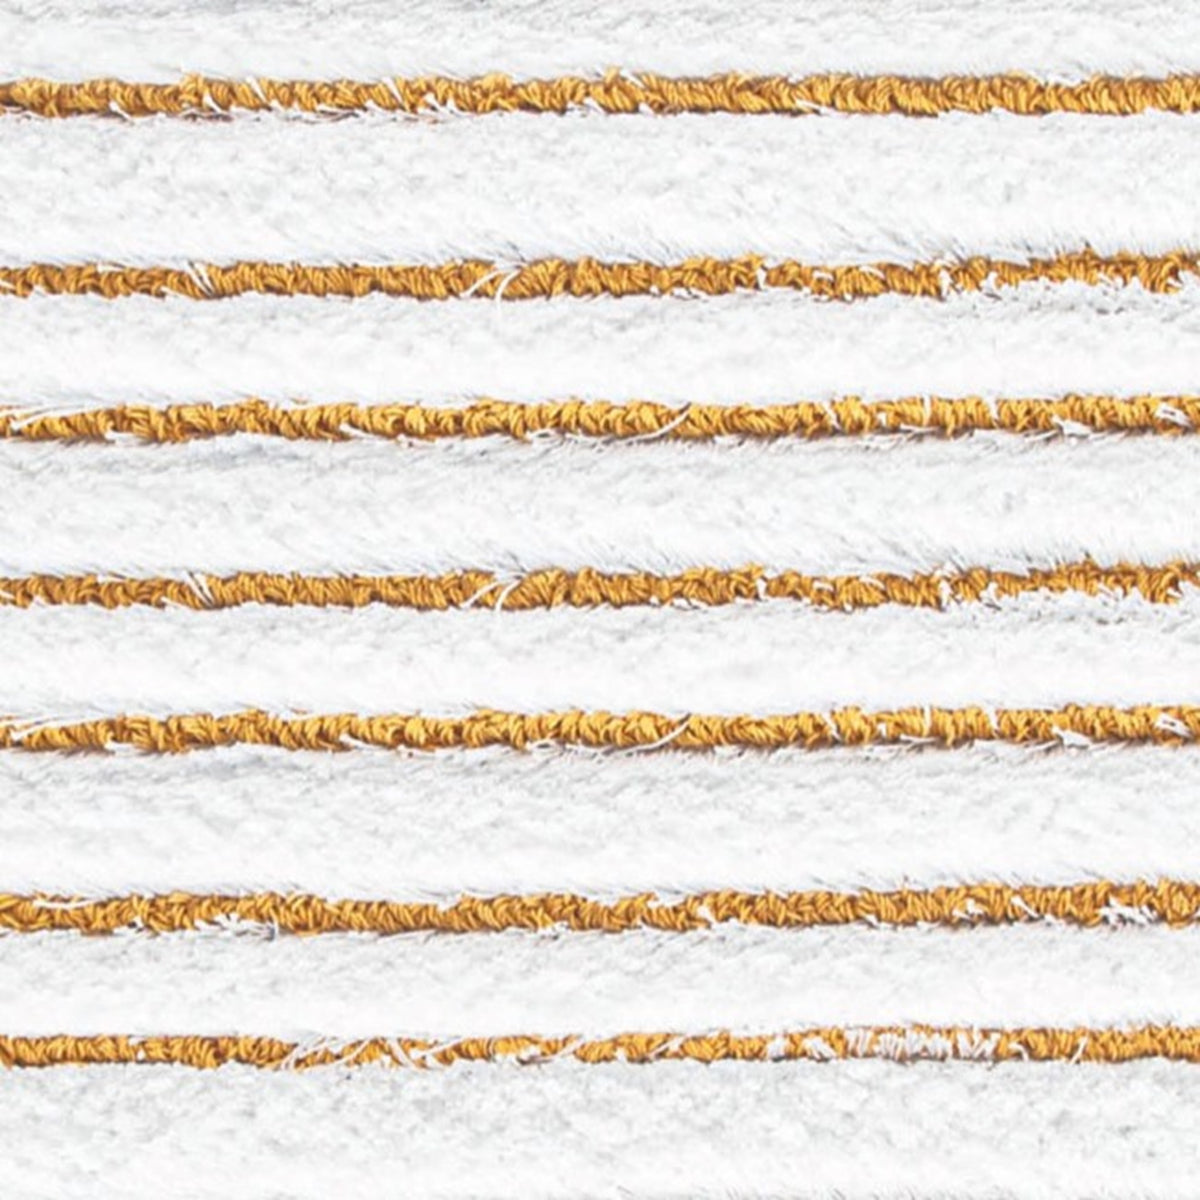 Swatch Sample of Graccioza Taormina Bath Towels in Color Gold